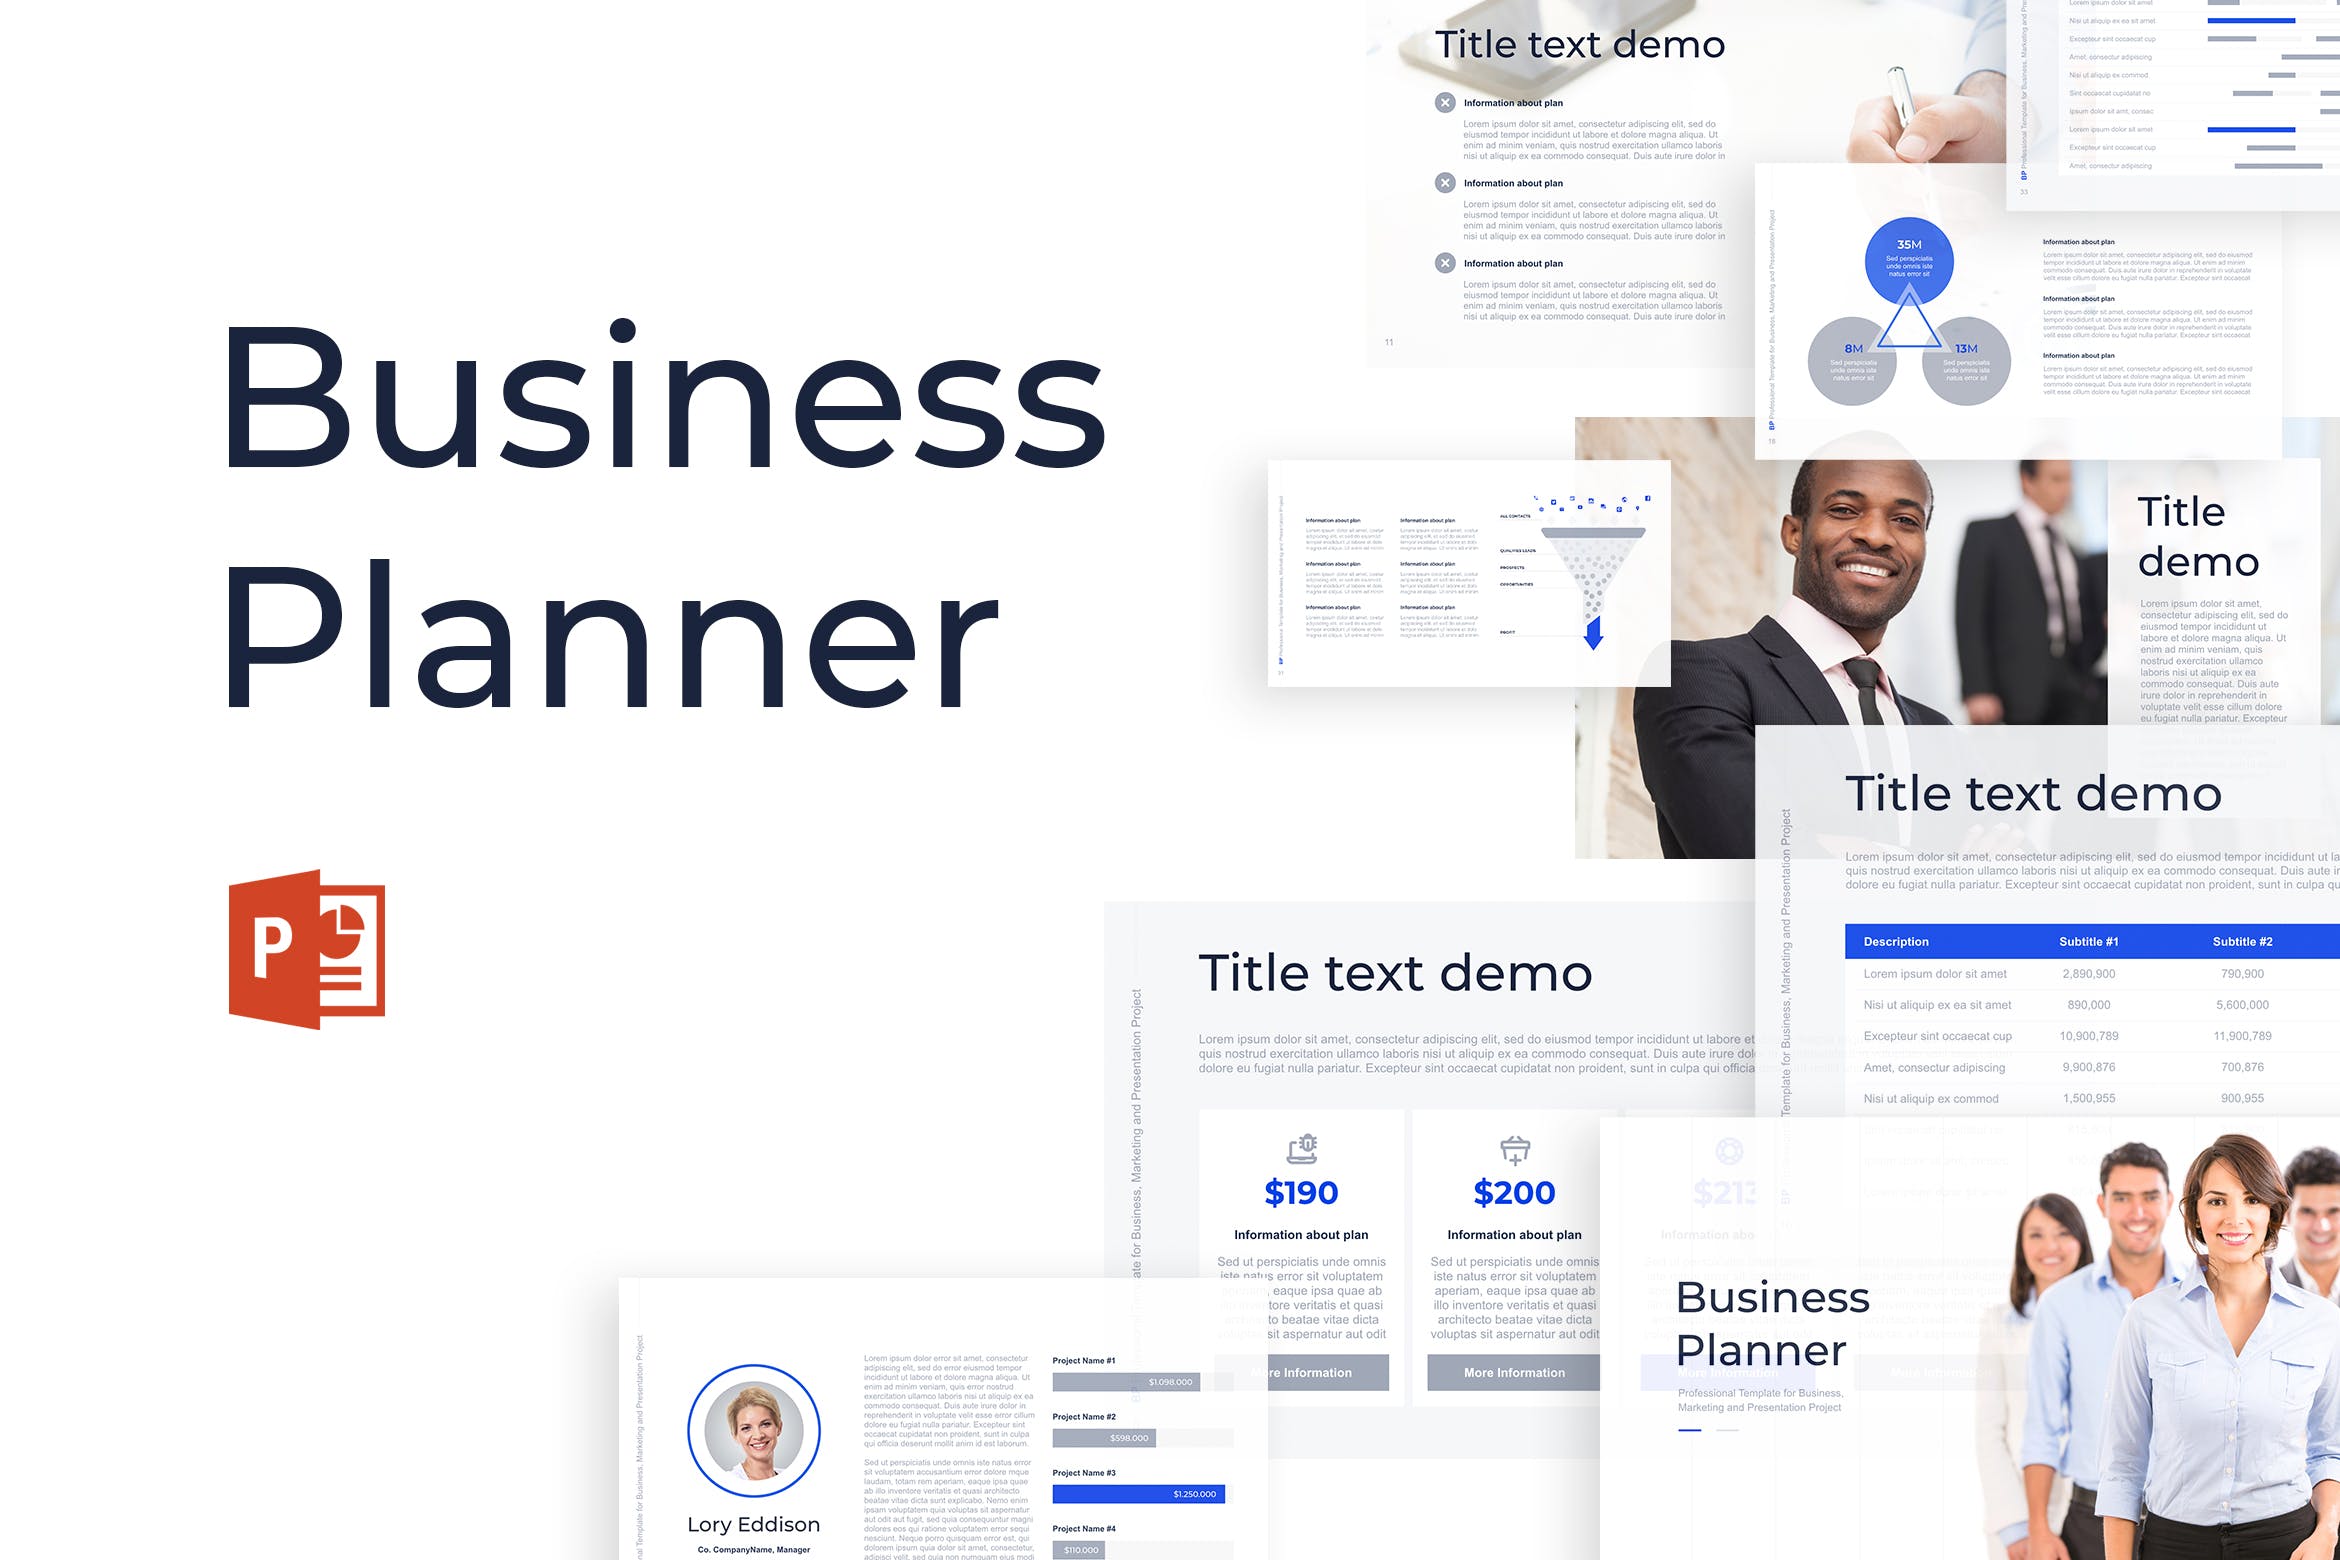 创业融资商业计划书PPT幻灯片模板 Business Planner PowerPoint Template插图